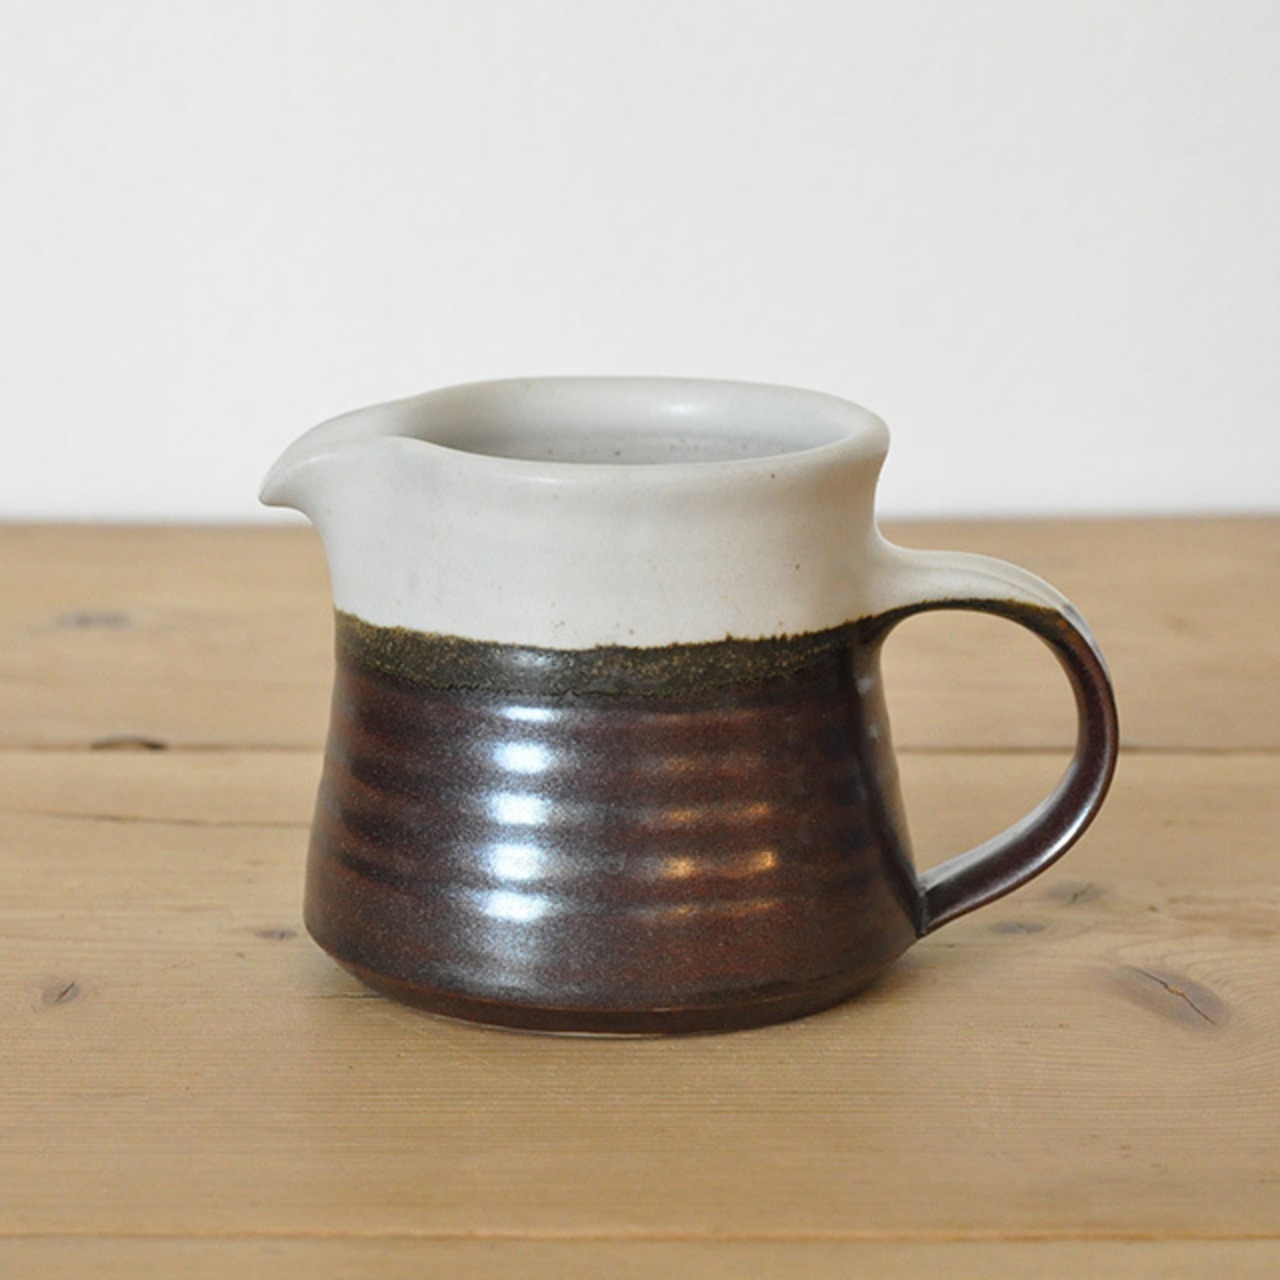 Pottery Milk Pitcher / ポタリー ミルク ピッチャー / 1911-0227-1